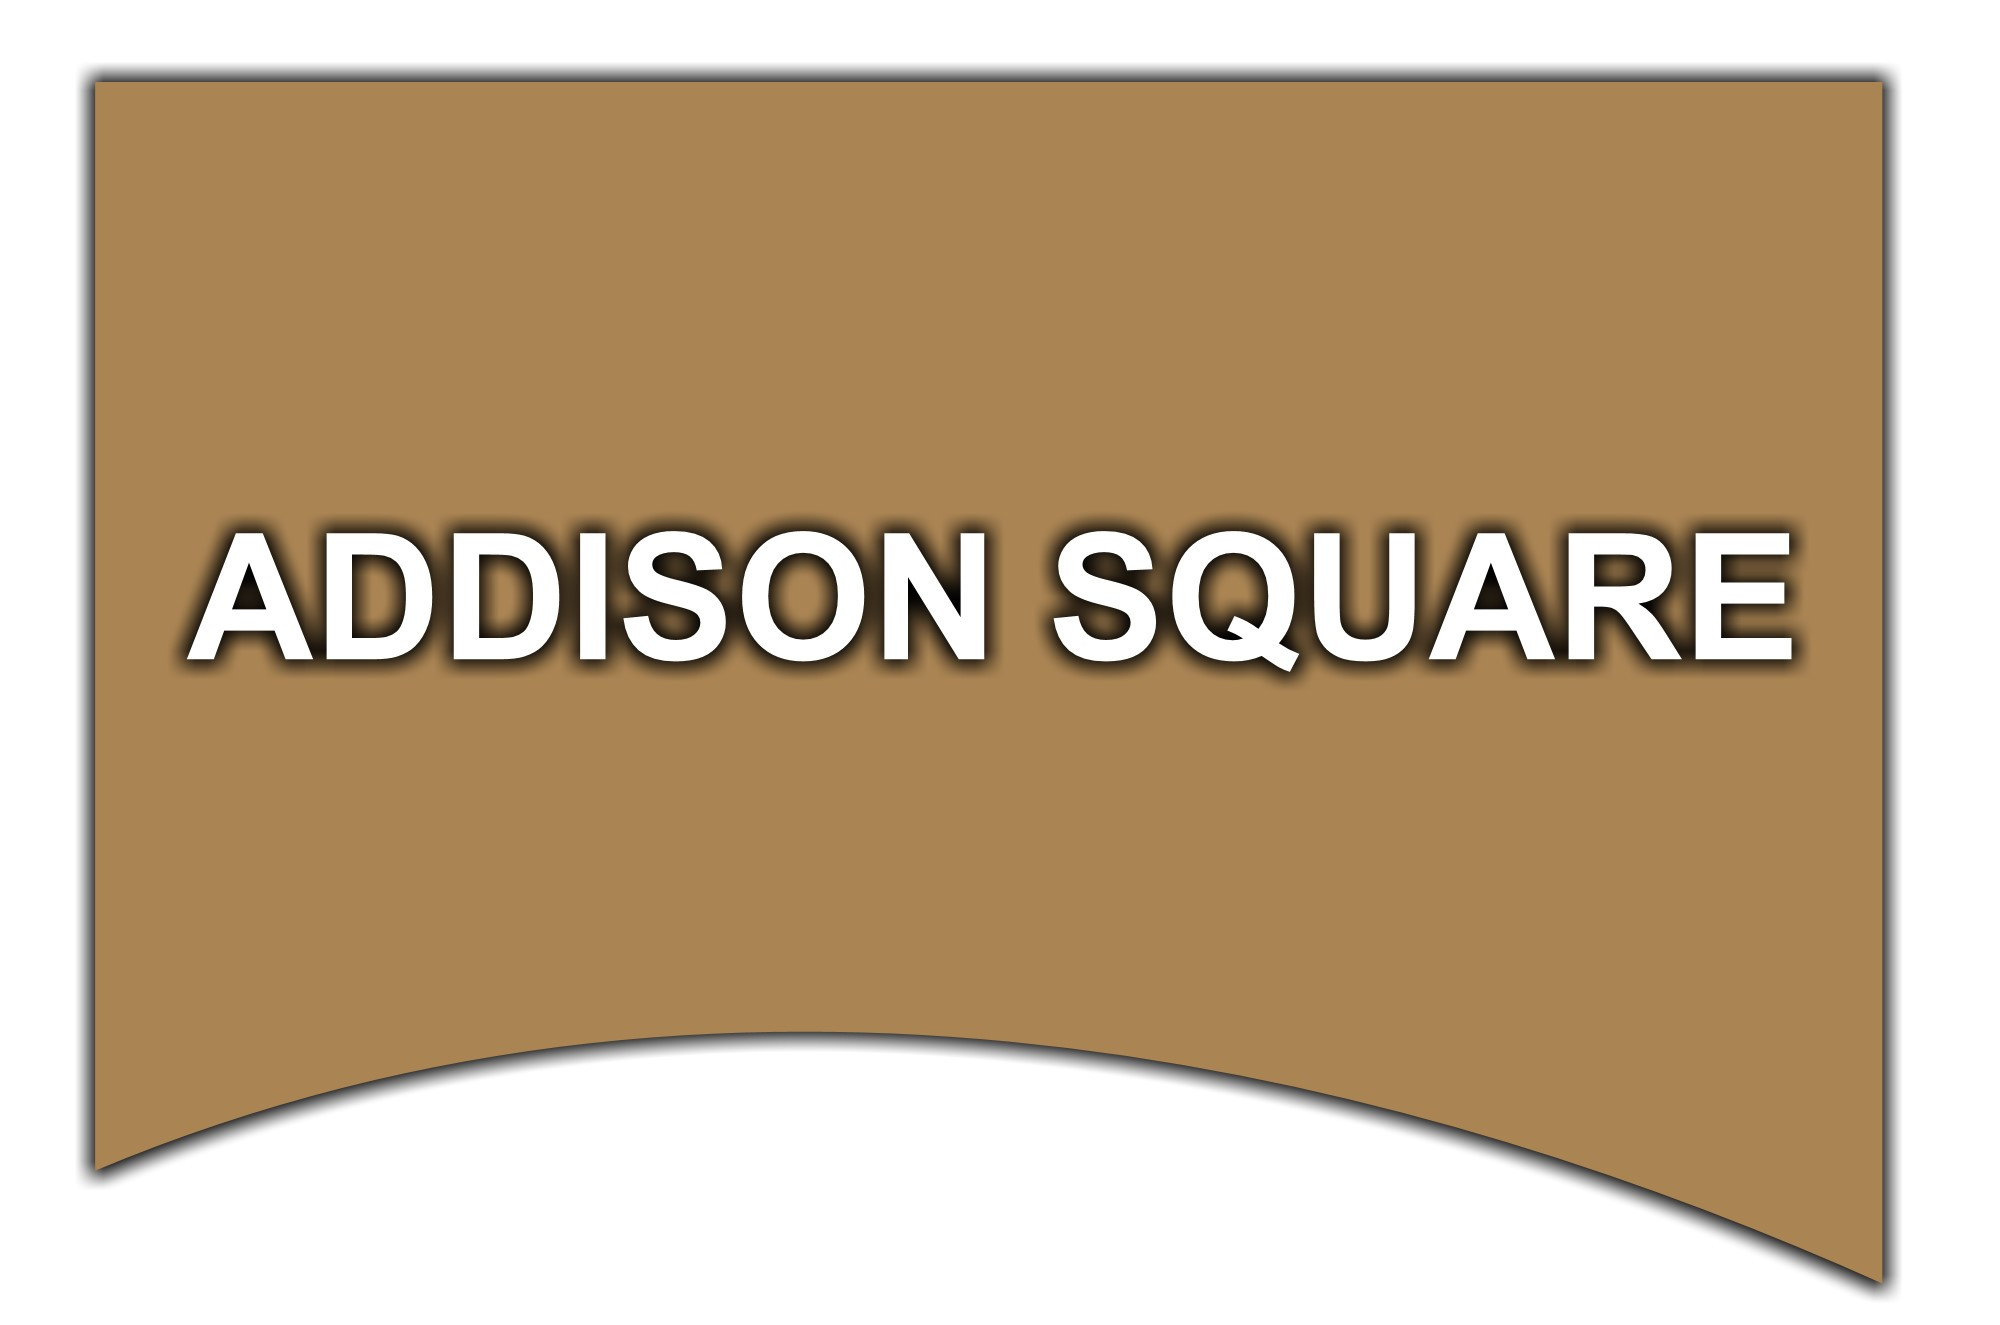 Addison Square, , Florida